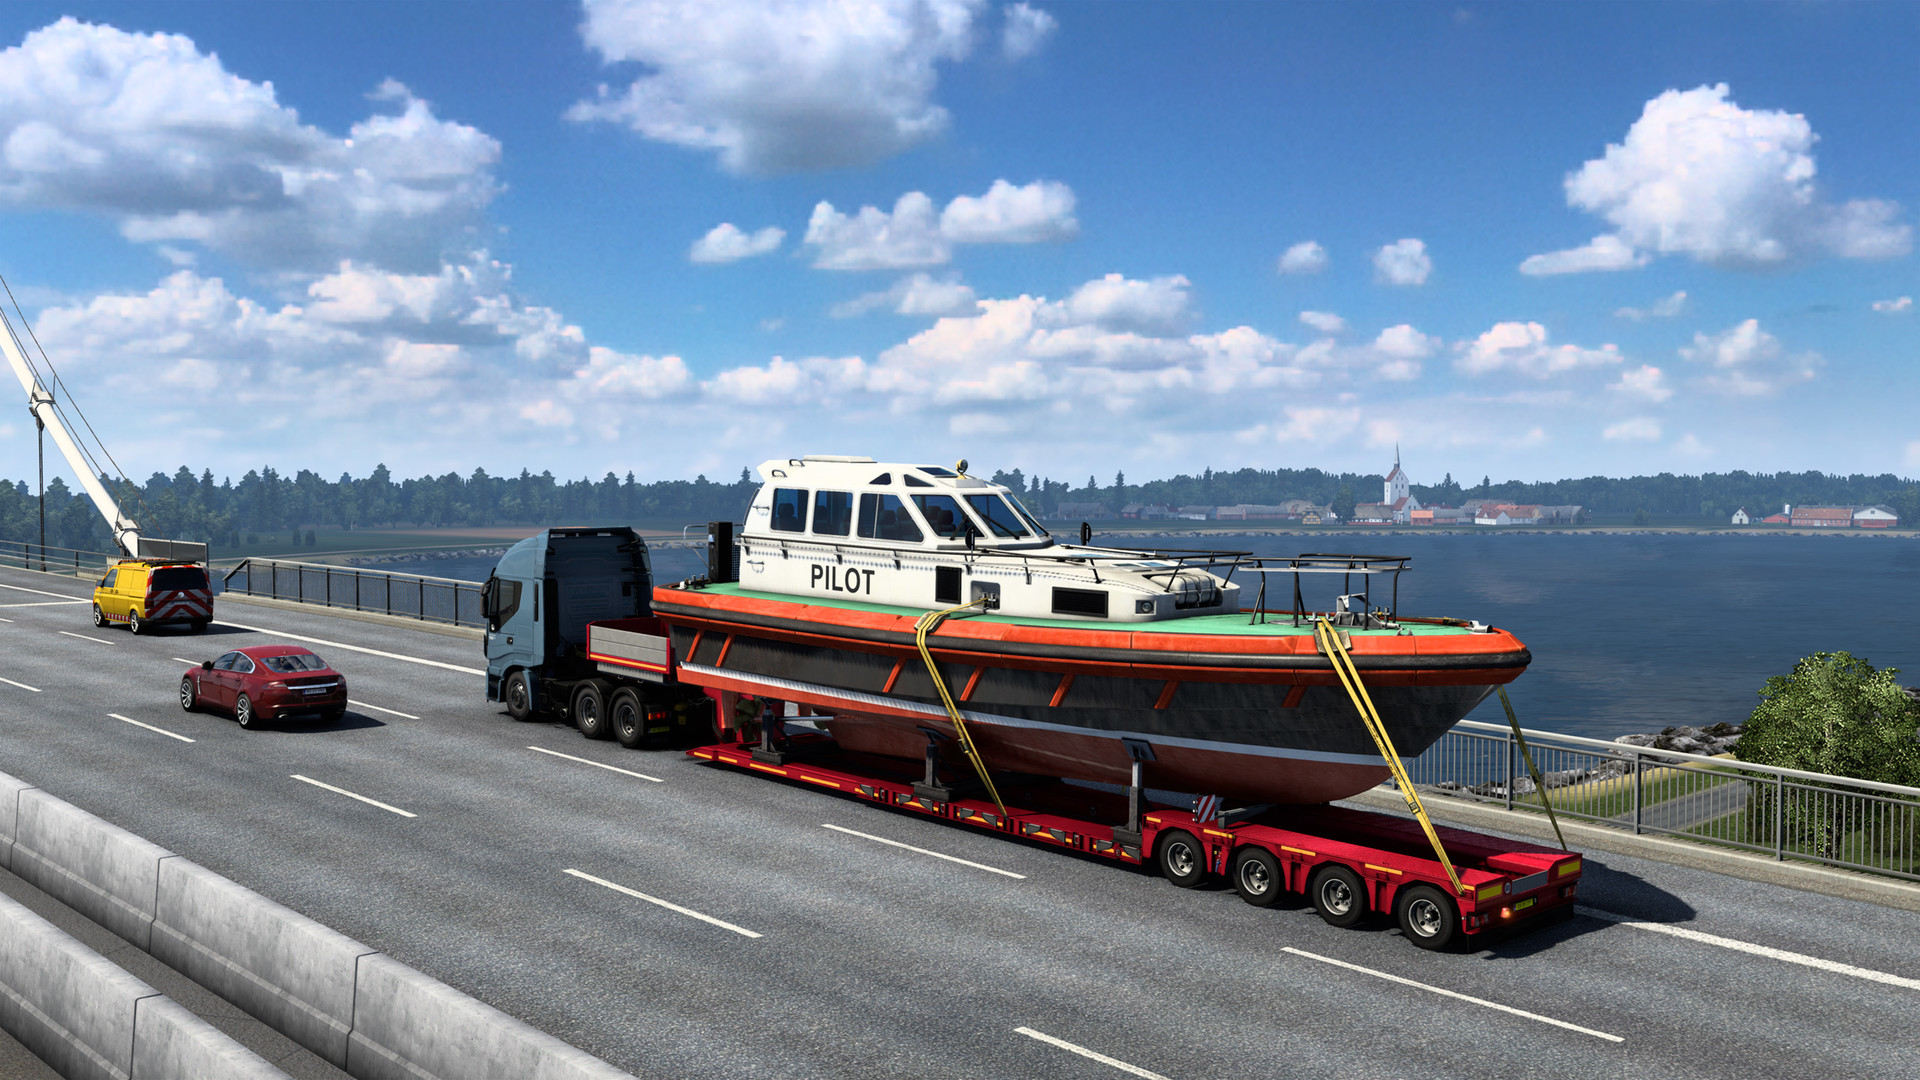 Buy Euro Truck Simulator 2 Steam